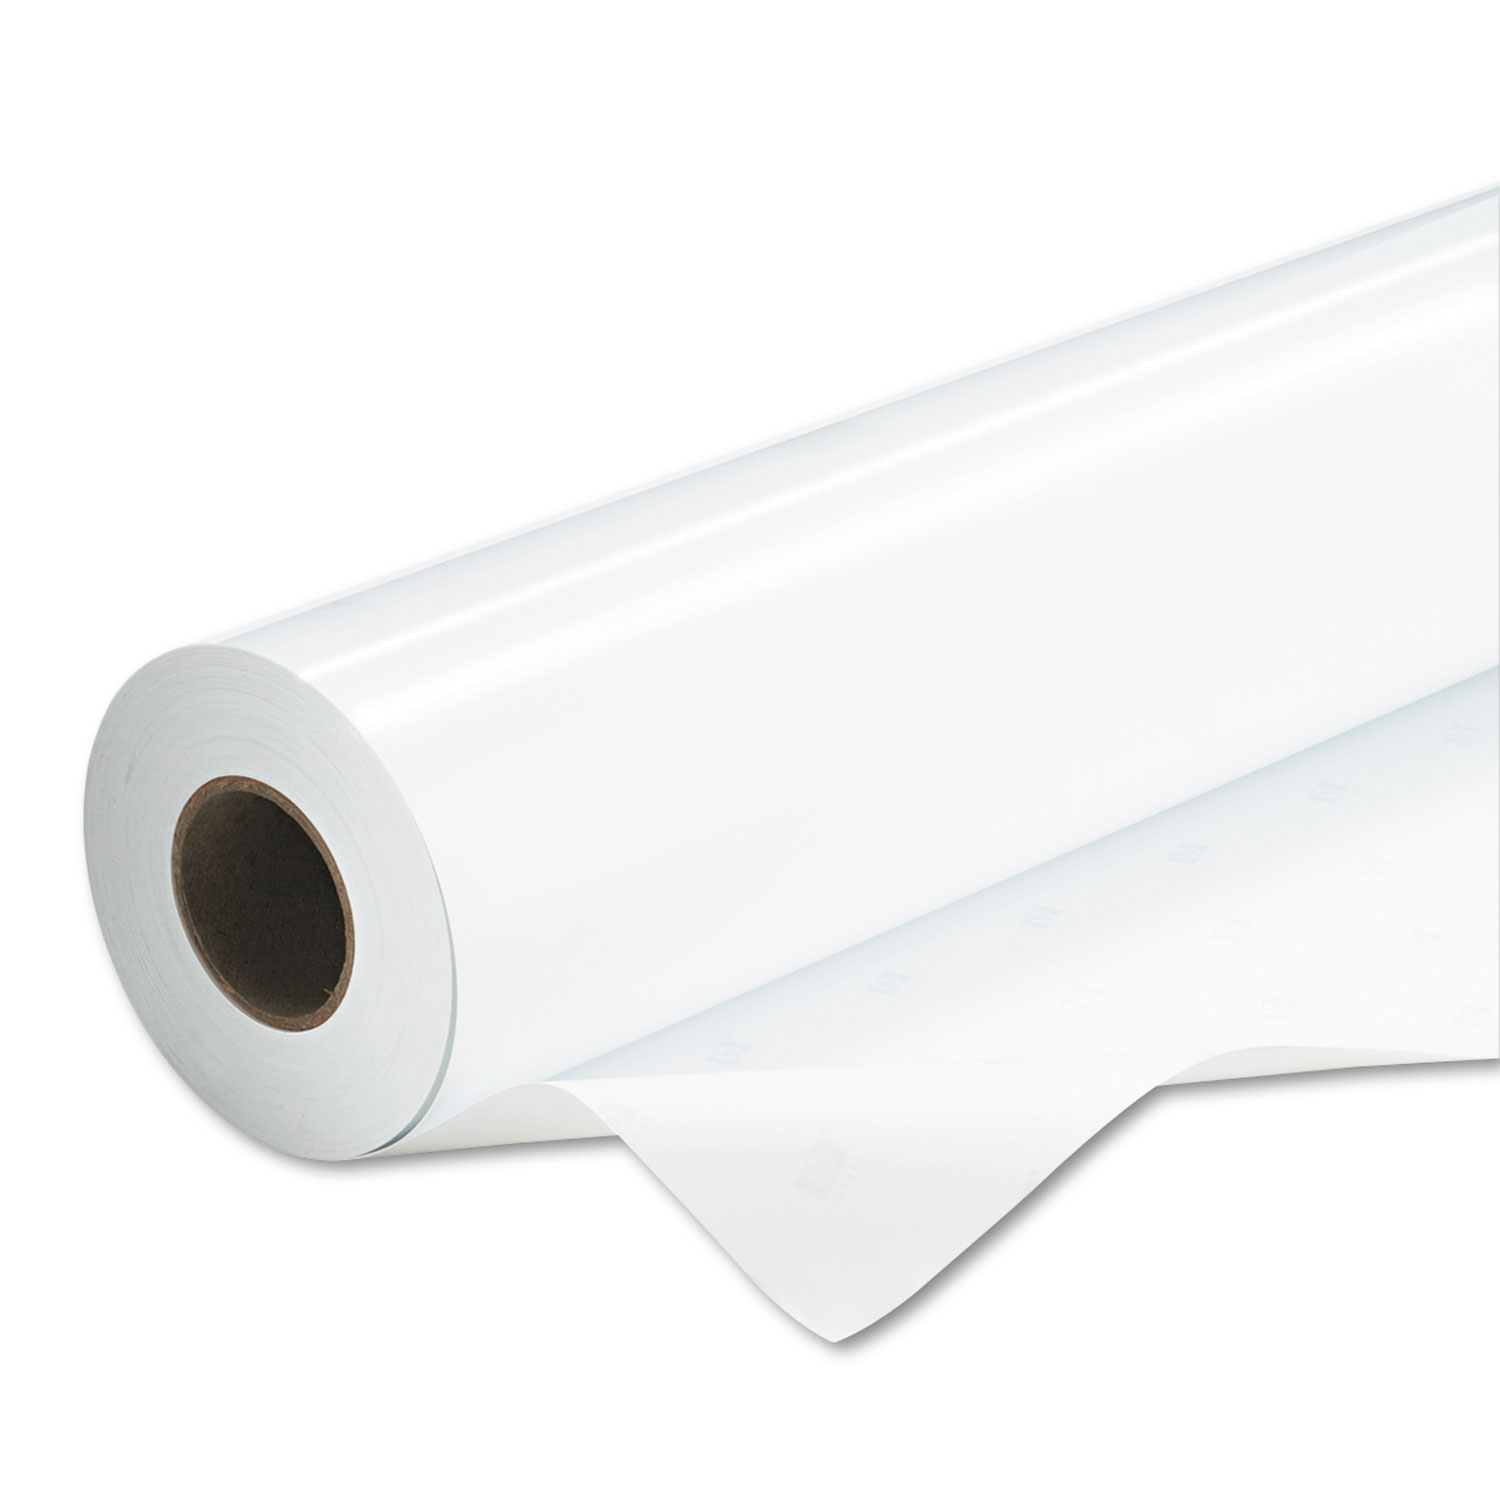 Premium Instant-Dry Photo Paper, 50 x 100 ft, White